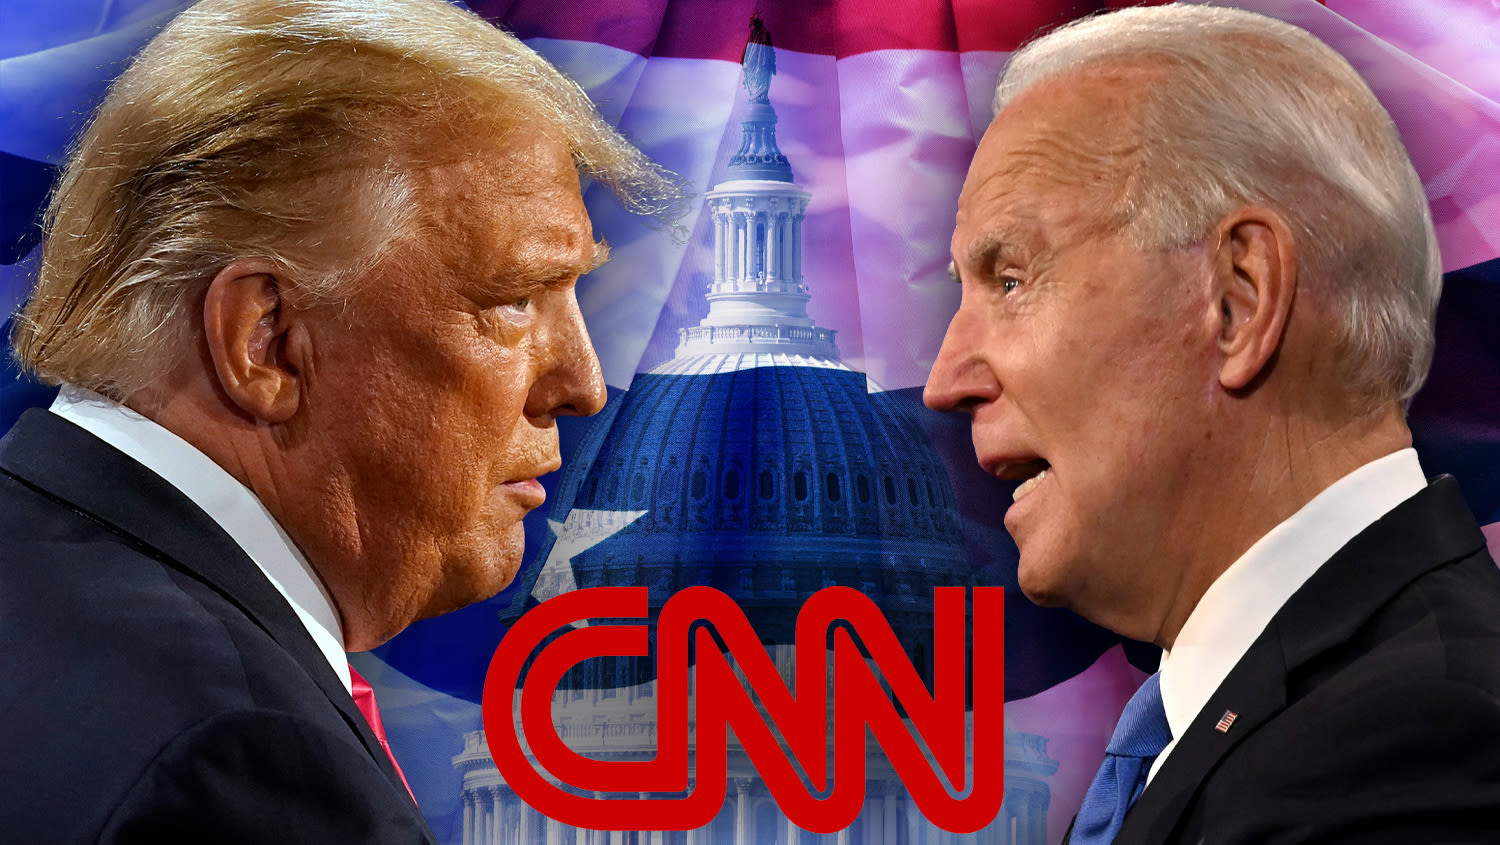 “Not A Normal Year”: CNN’s Biden-Trump Debate Puts Added Pressure On Moderators Jake Tapper And Dana Bash To Meet...